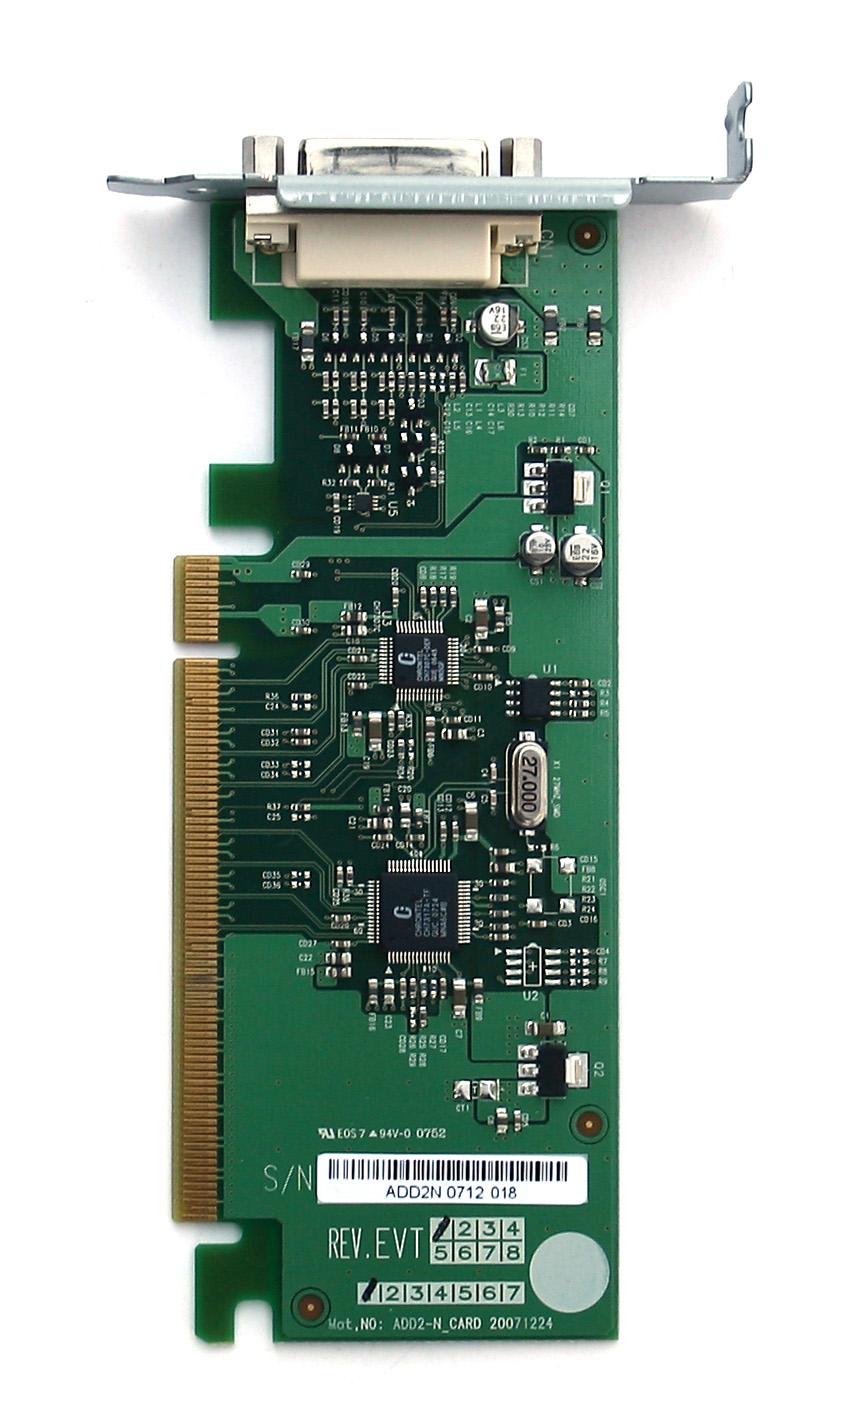 NXE- ADD2-DCL 제품기능의요약 UXGA 해상도지원 (1600x1200) 디지털모니터및아날로그모니터지원 PCI-Express slot을이용한손쉬운 Display 확장성 (SDVO Interface이용 ) Low-Profile type 적용으로인한기구높이최소화 제품의특징 DVI-I Connector를이용한